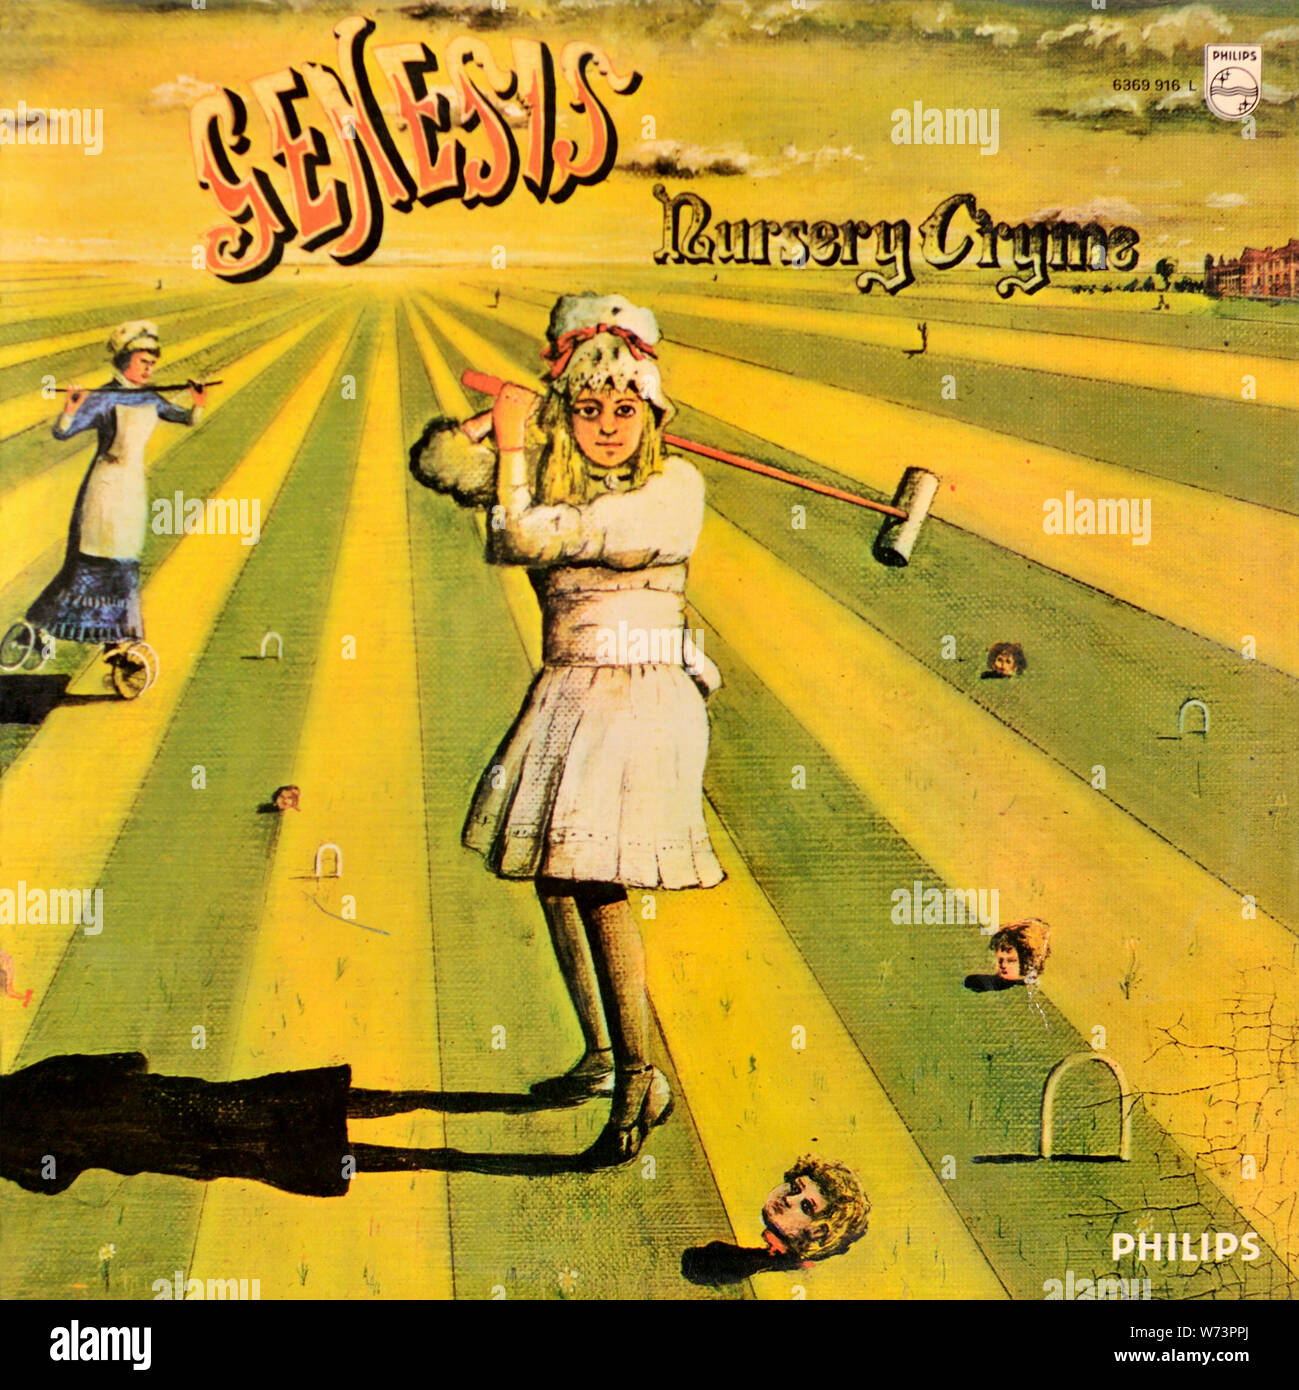 Genesis - copertina originale in vinile - Nursery Cryme (Philips) - 1971 Foto Stock